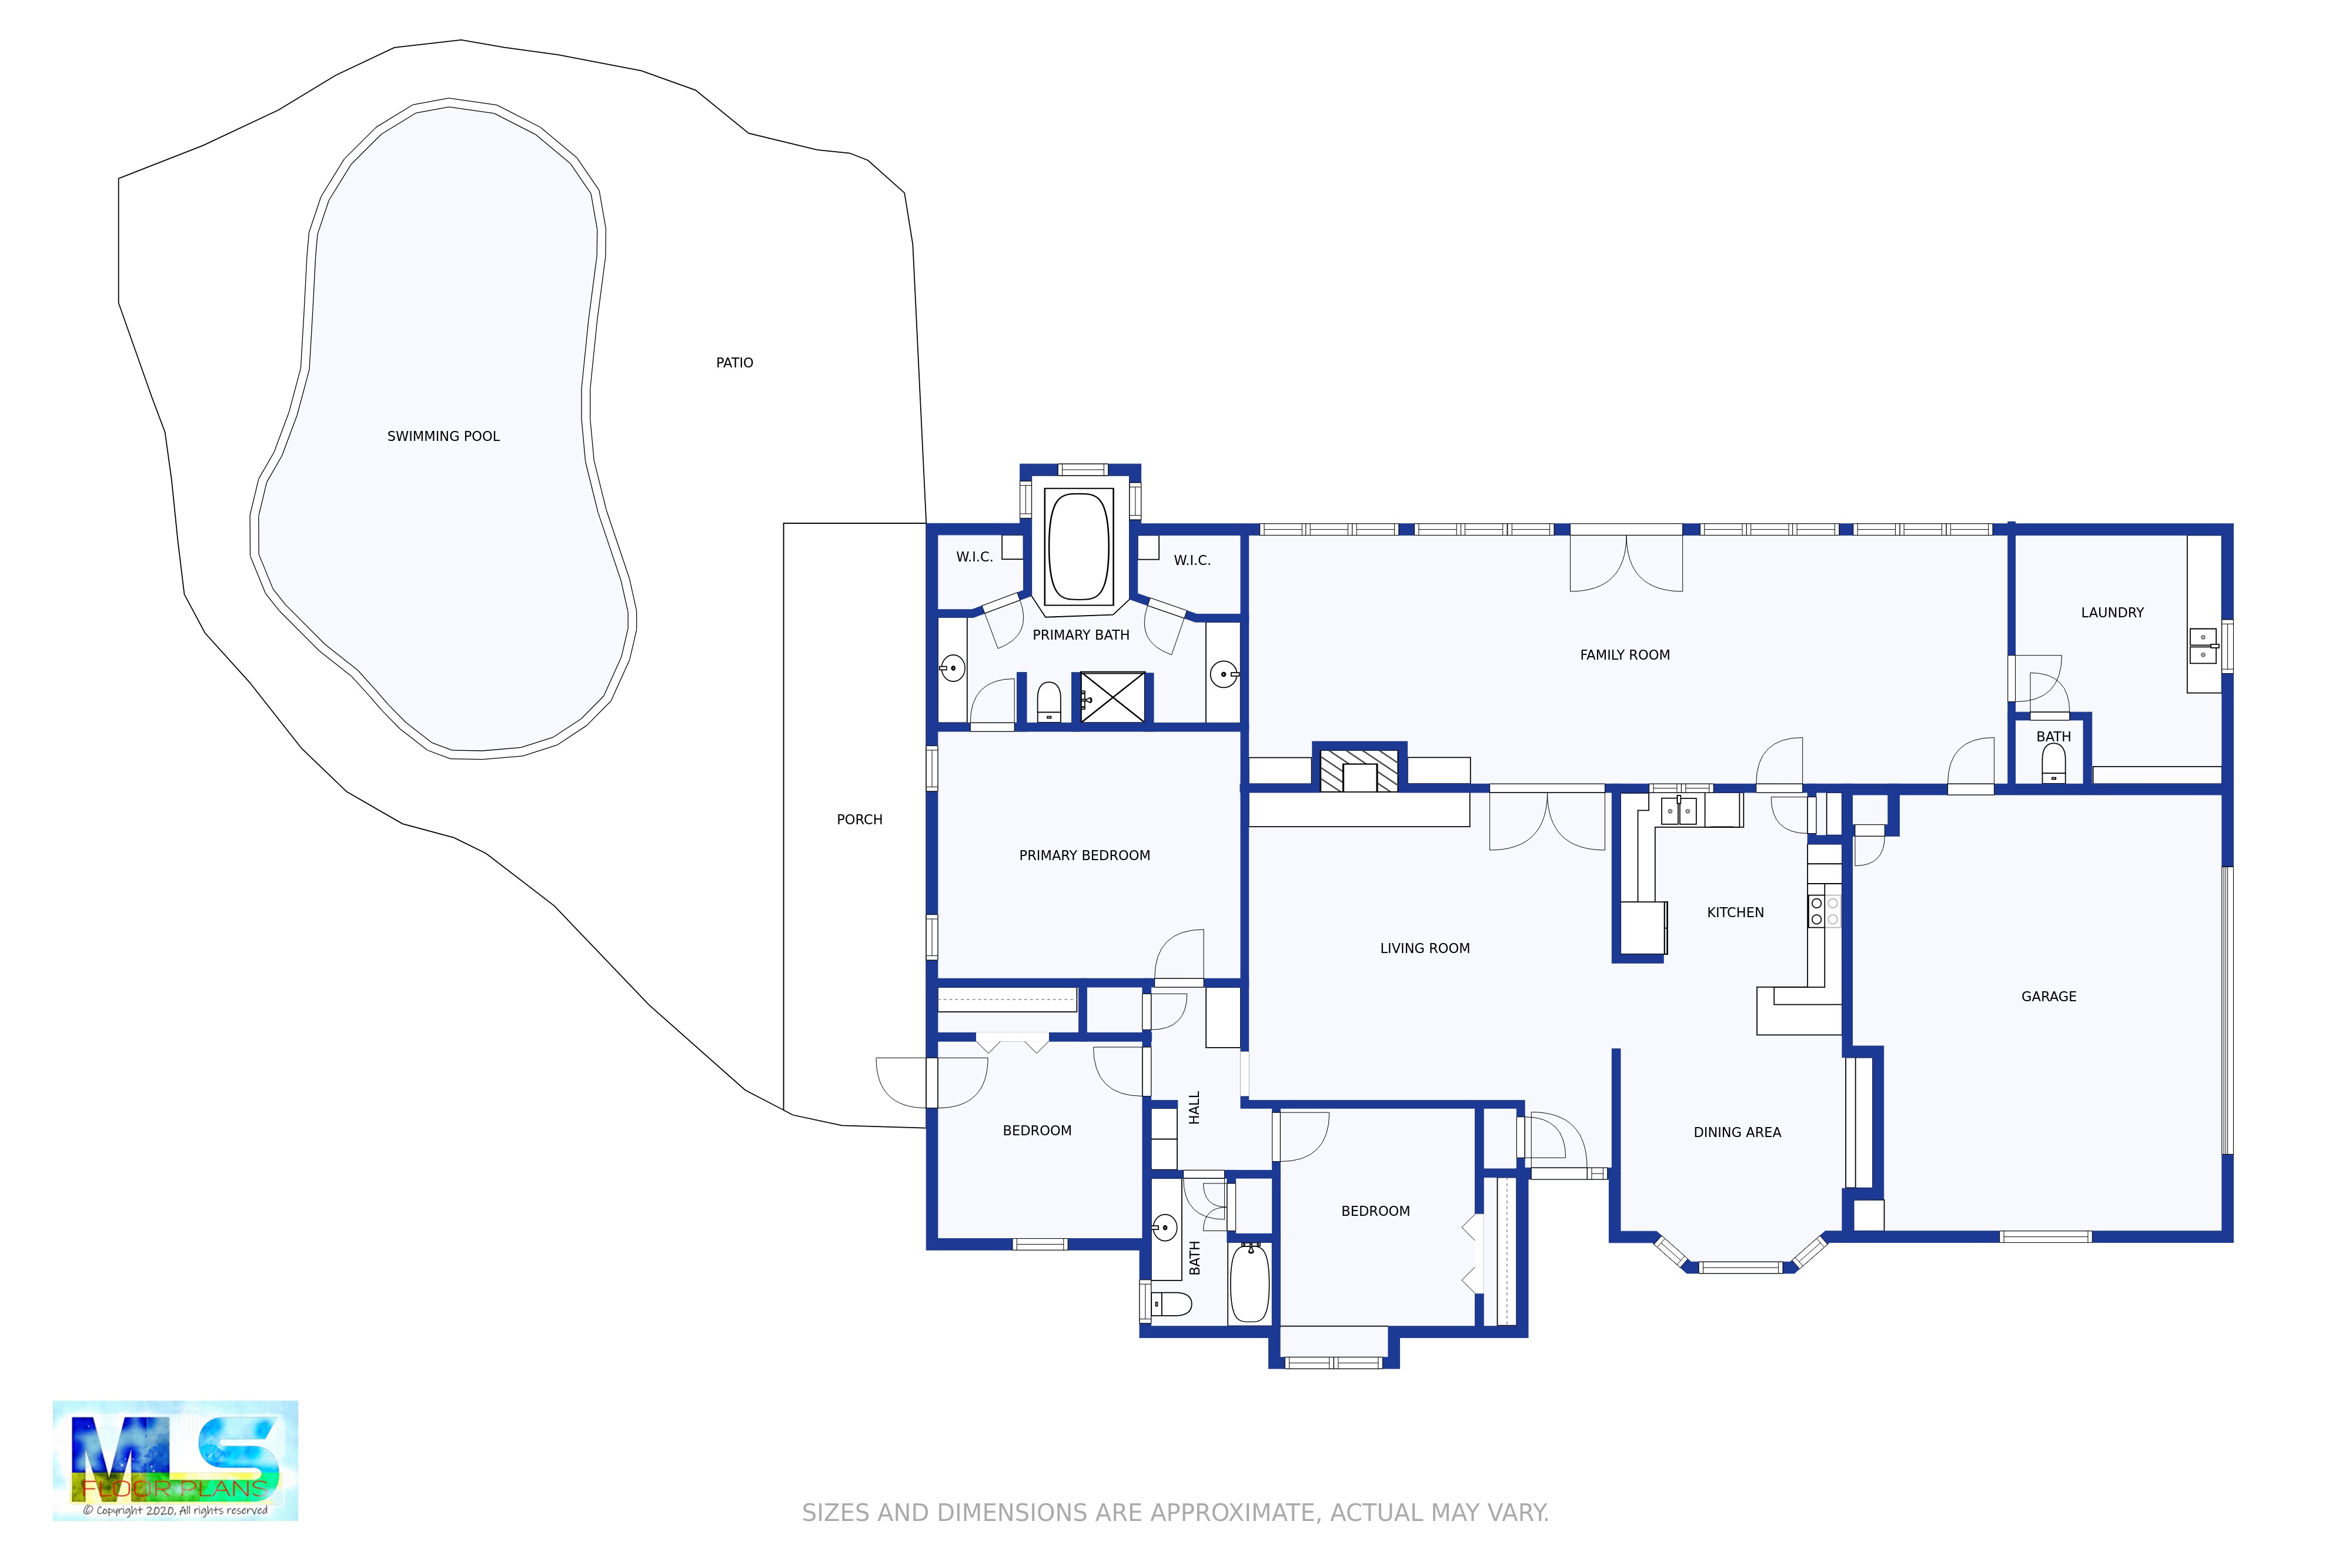 Floorplan for 4100 Tall Oaks Ln, Crowley, Texas 76036